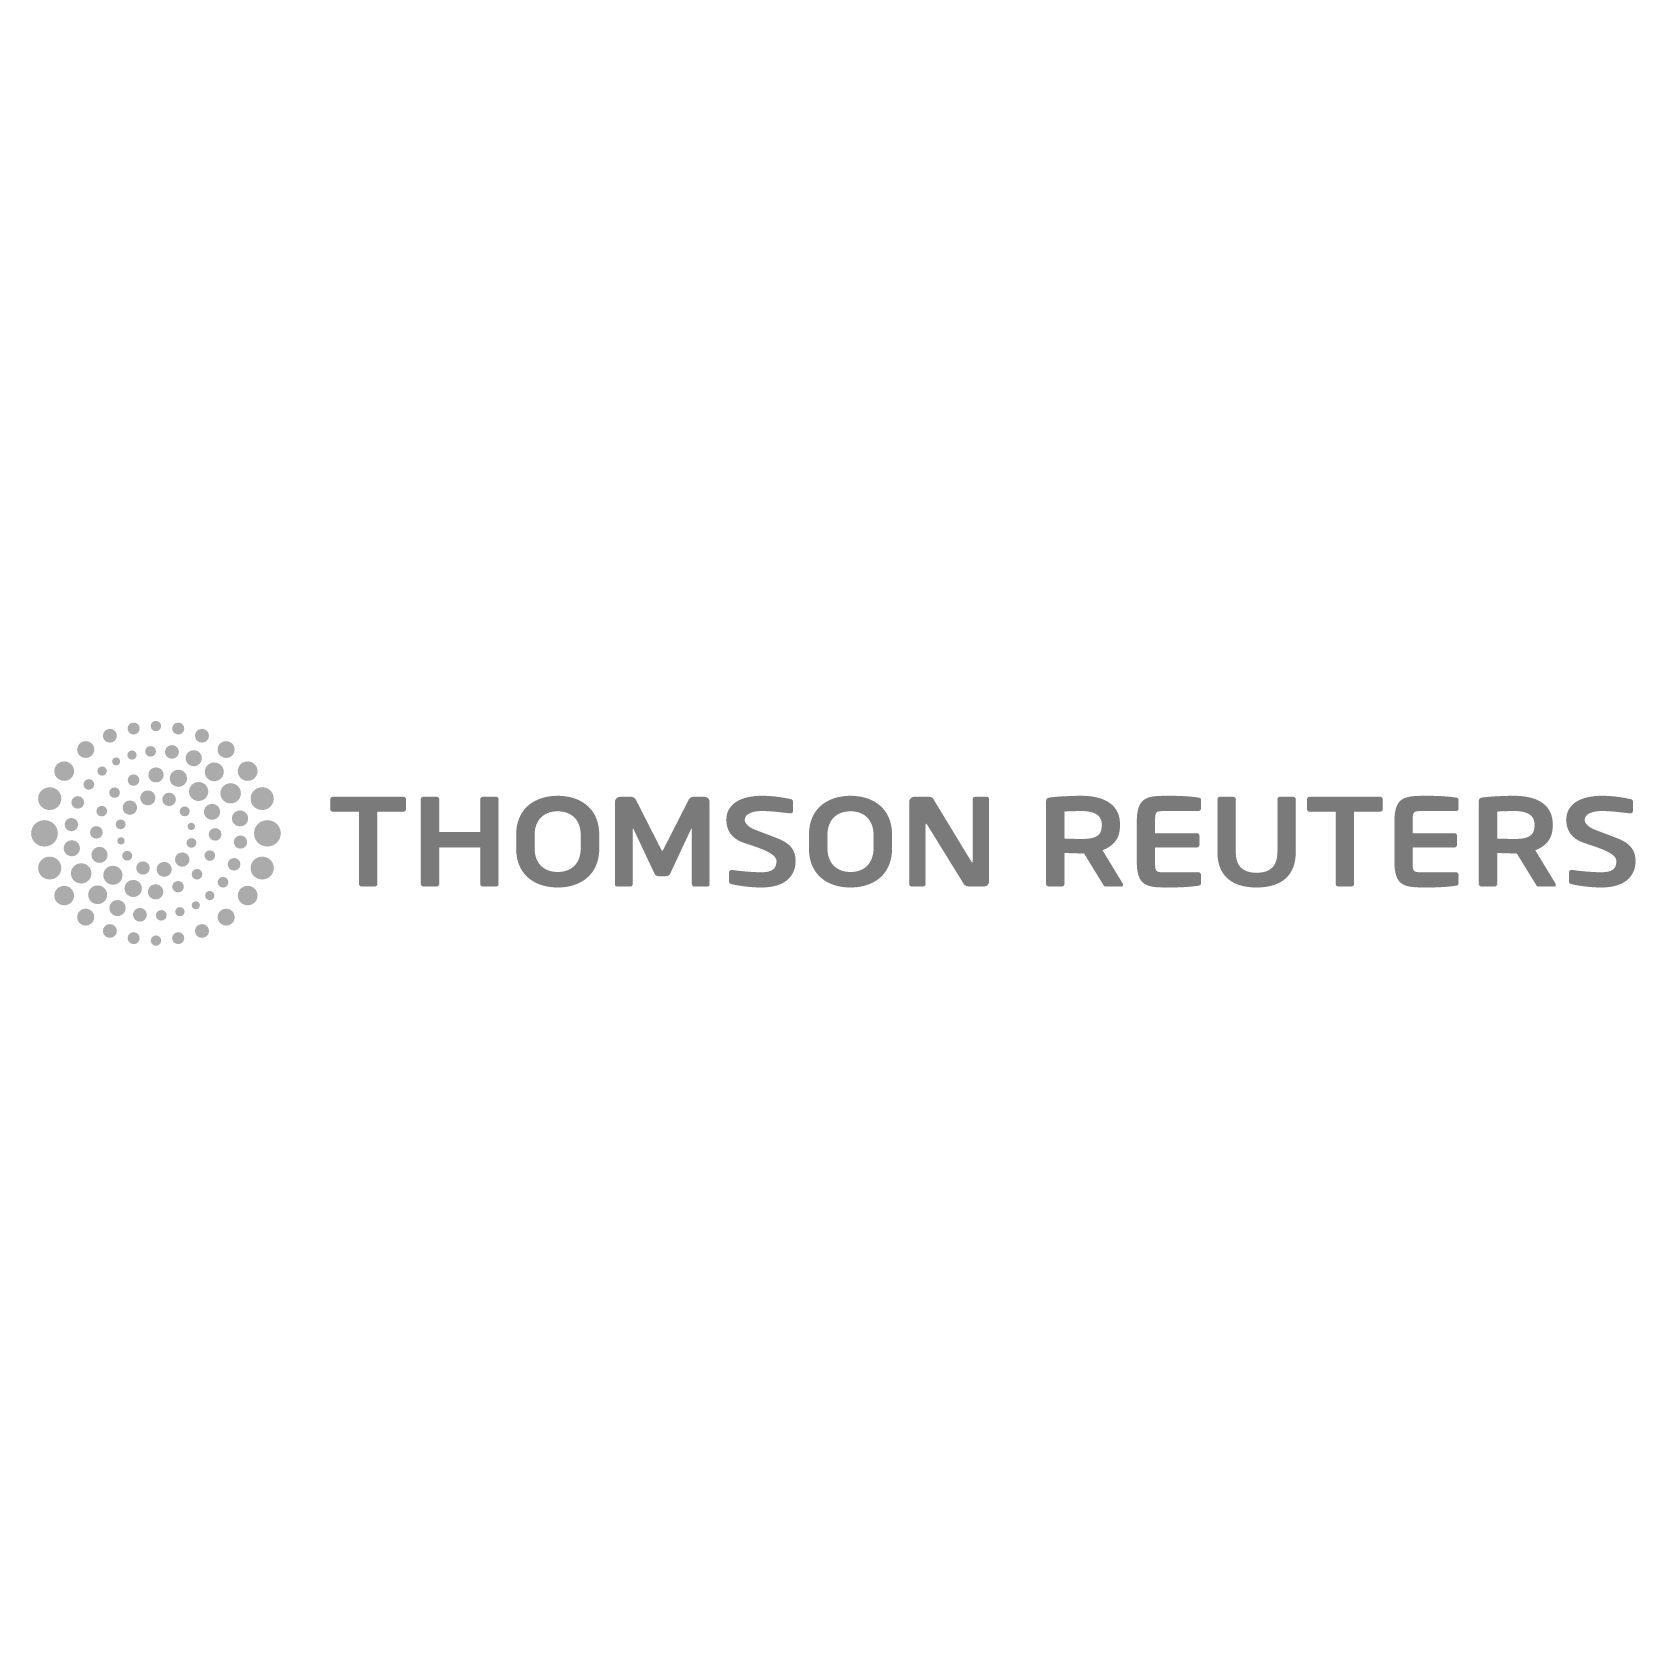 Thomson Reuters-01